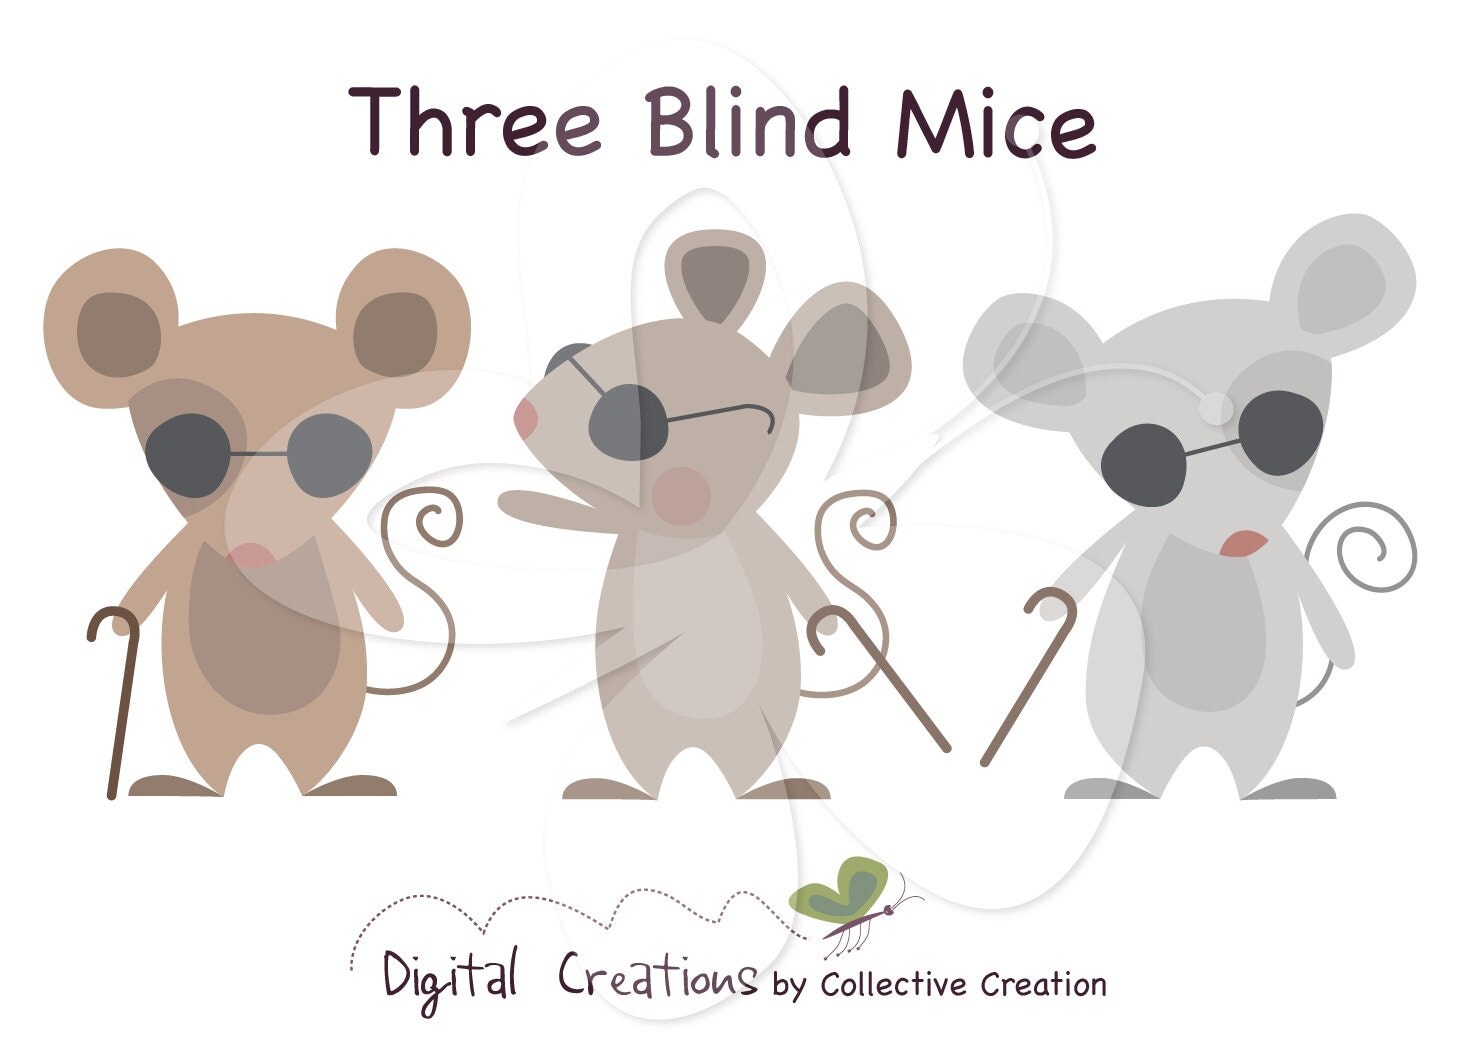 Three mouse. Three Blind Mice. Three Mice клипарт. Паттерн три слепых мыши. 3 Blind Mice illustration.